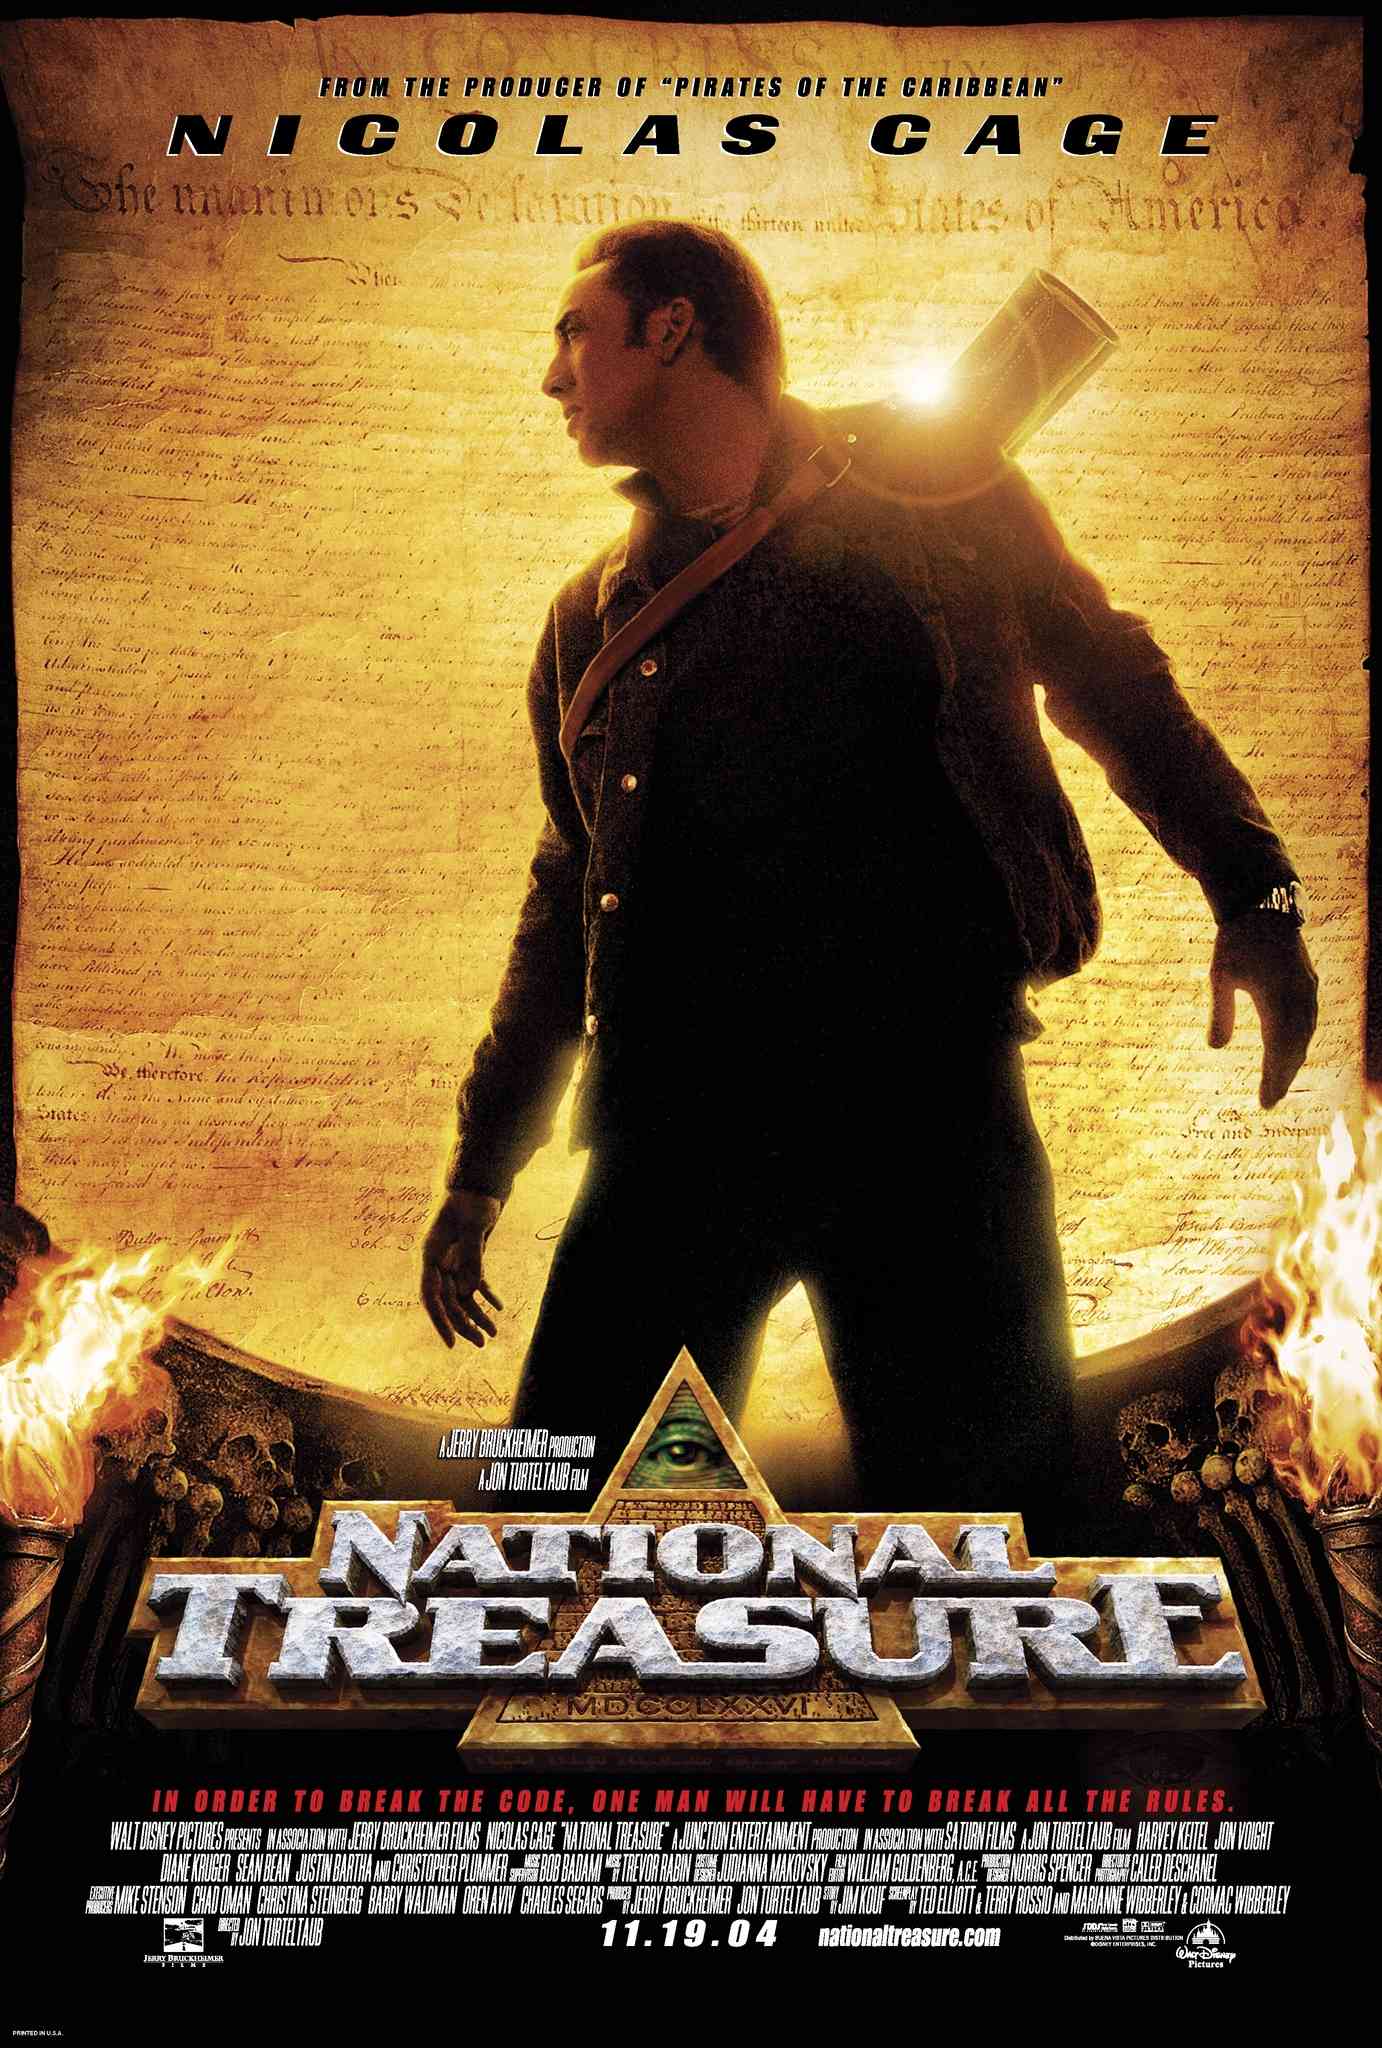 FULL MOVIE: National Treasure (2004) [Action]